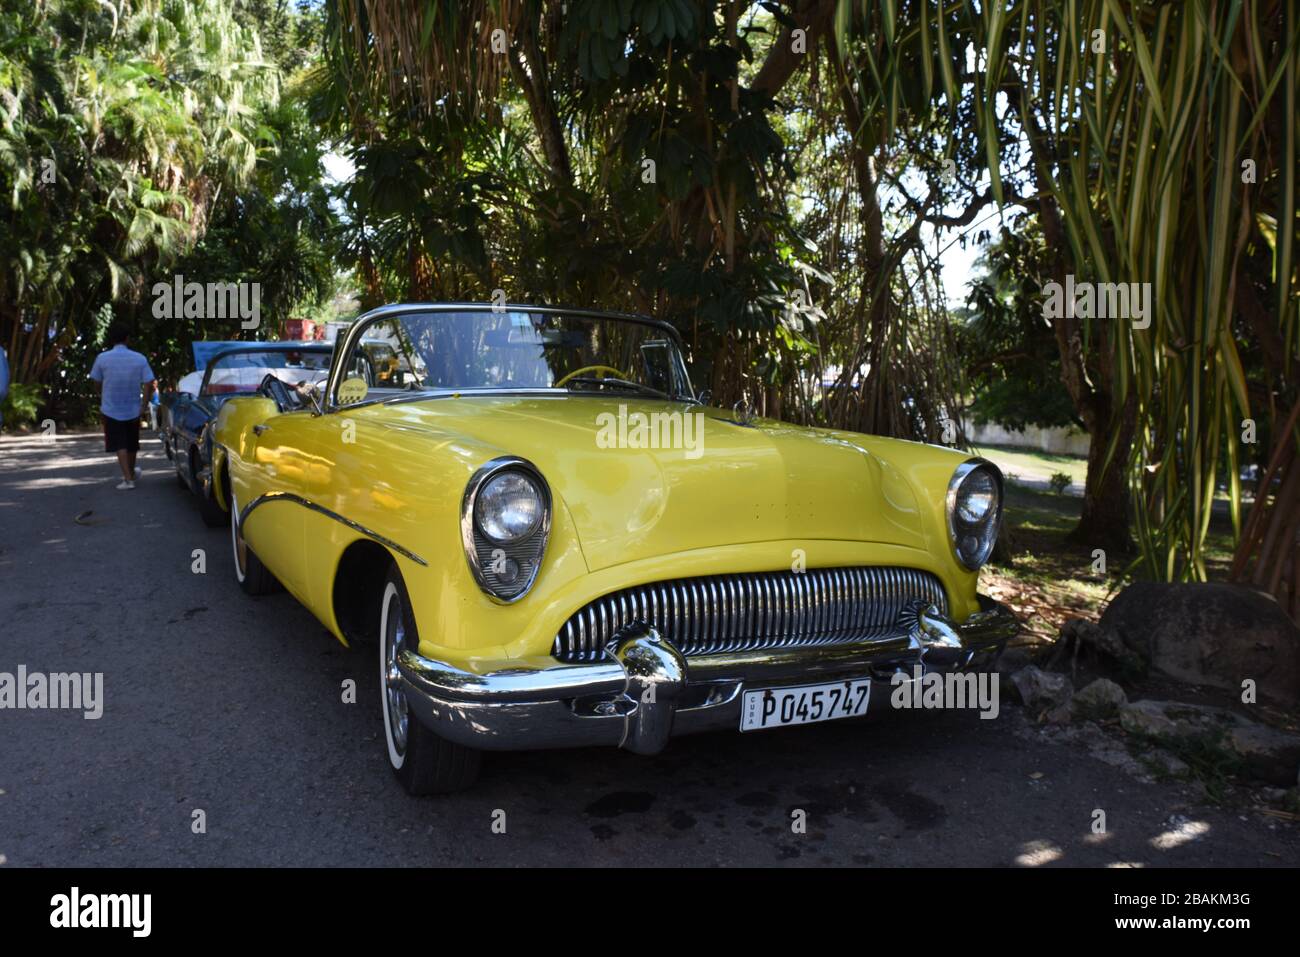 Detalles, coche, viejo, 2014, Cuba Foto de stock